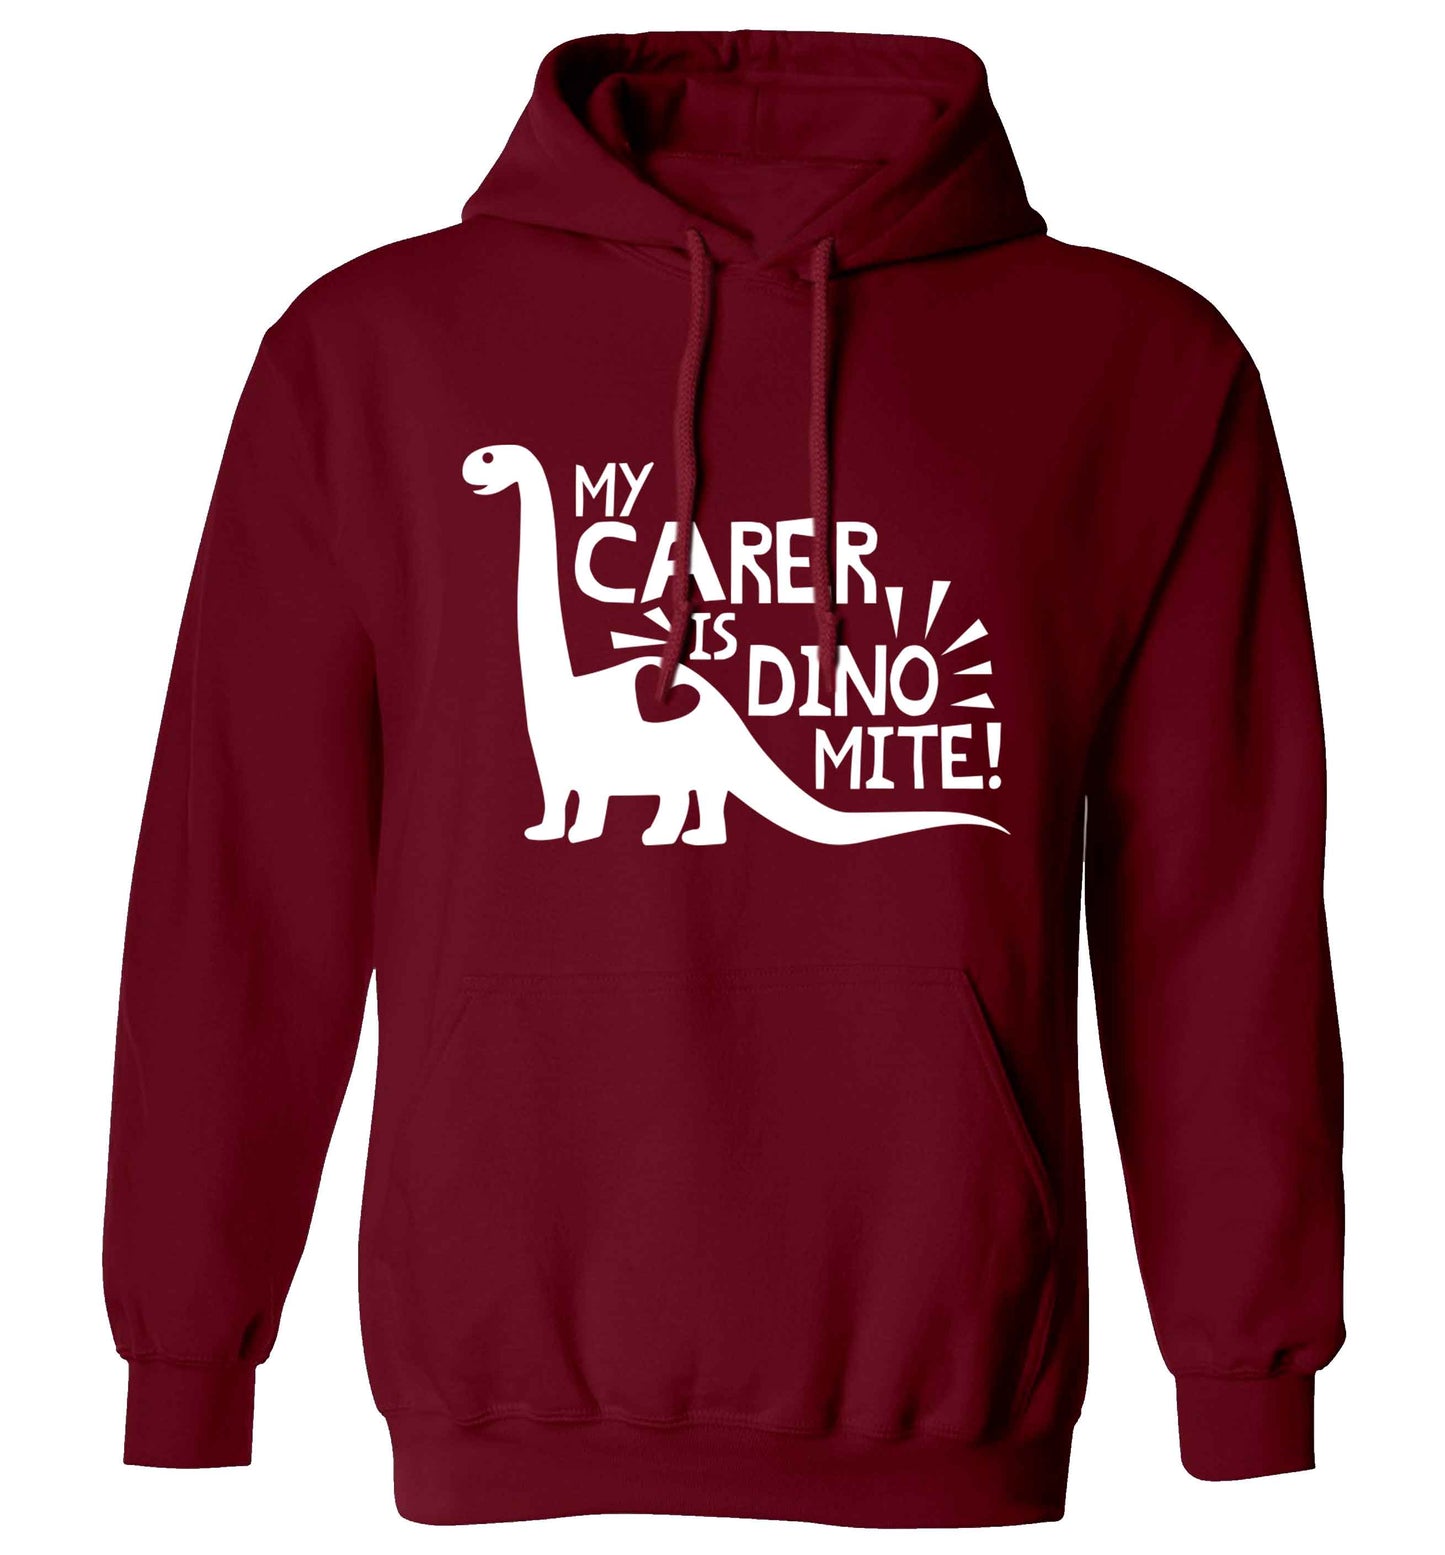 My carer is dinomite! adults unisex maroon hoodie 2XL